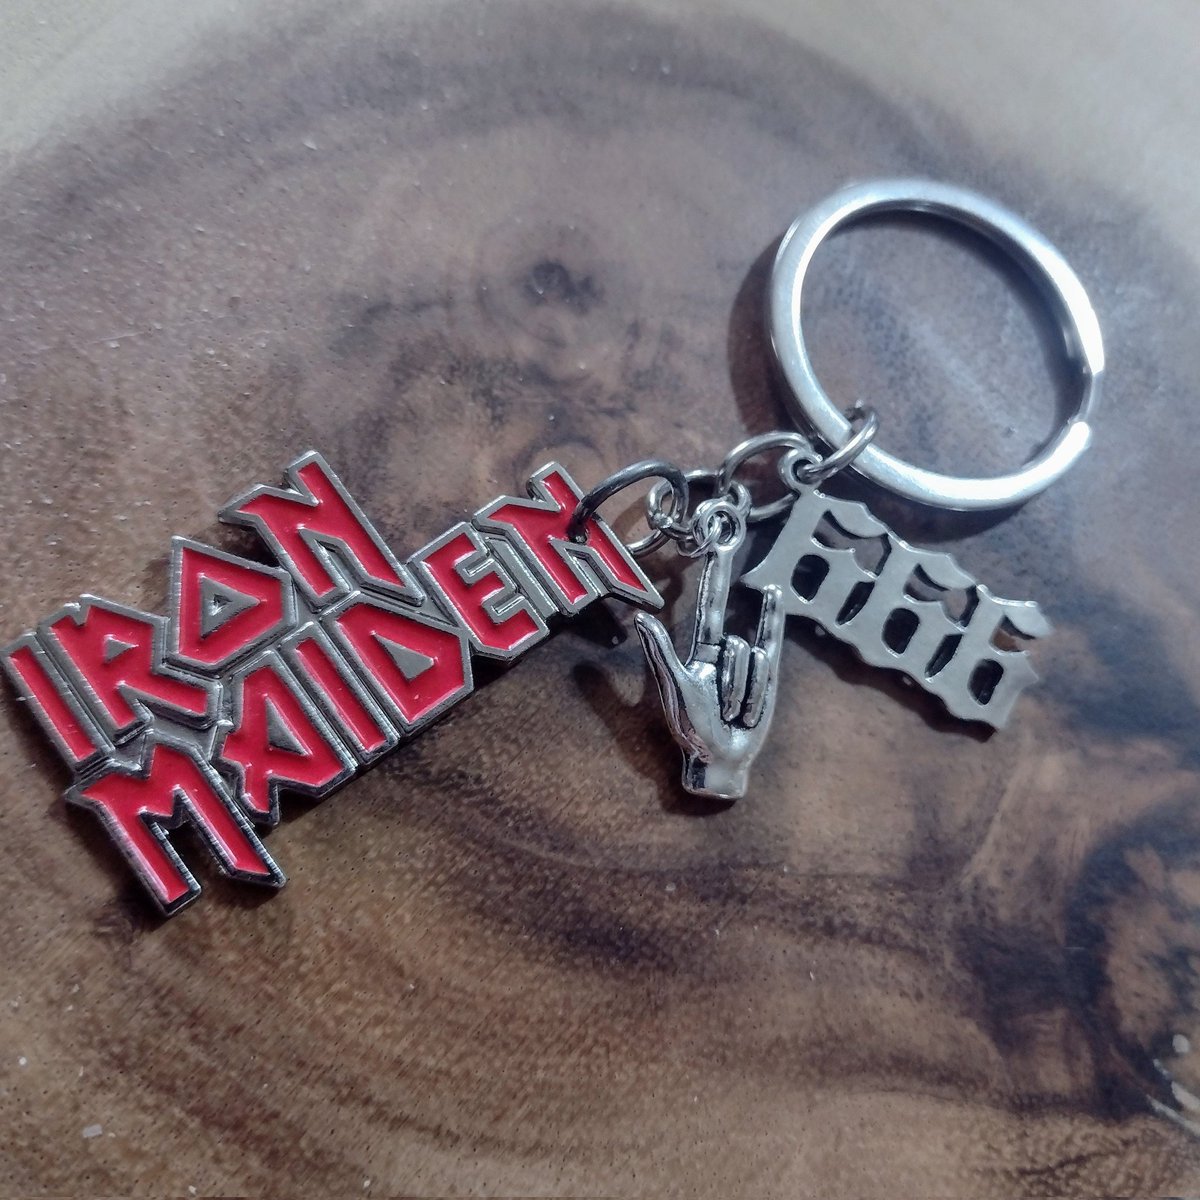 British heavy metal legends Iron Maiden 666 keychain thatcraftyfella.etsy.com/listing/170937… #ironmaiden #heavymetal #metal #metallica #rock #metalhead #brucedickinson #steveharris #uptheirons #music #davemurray #adriansmith #ironmaidenfan #nickomcbrain #guitar #mhhsbd #ironmaidenfans